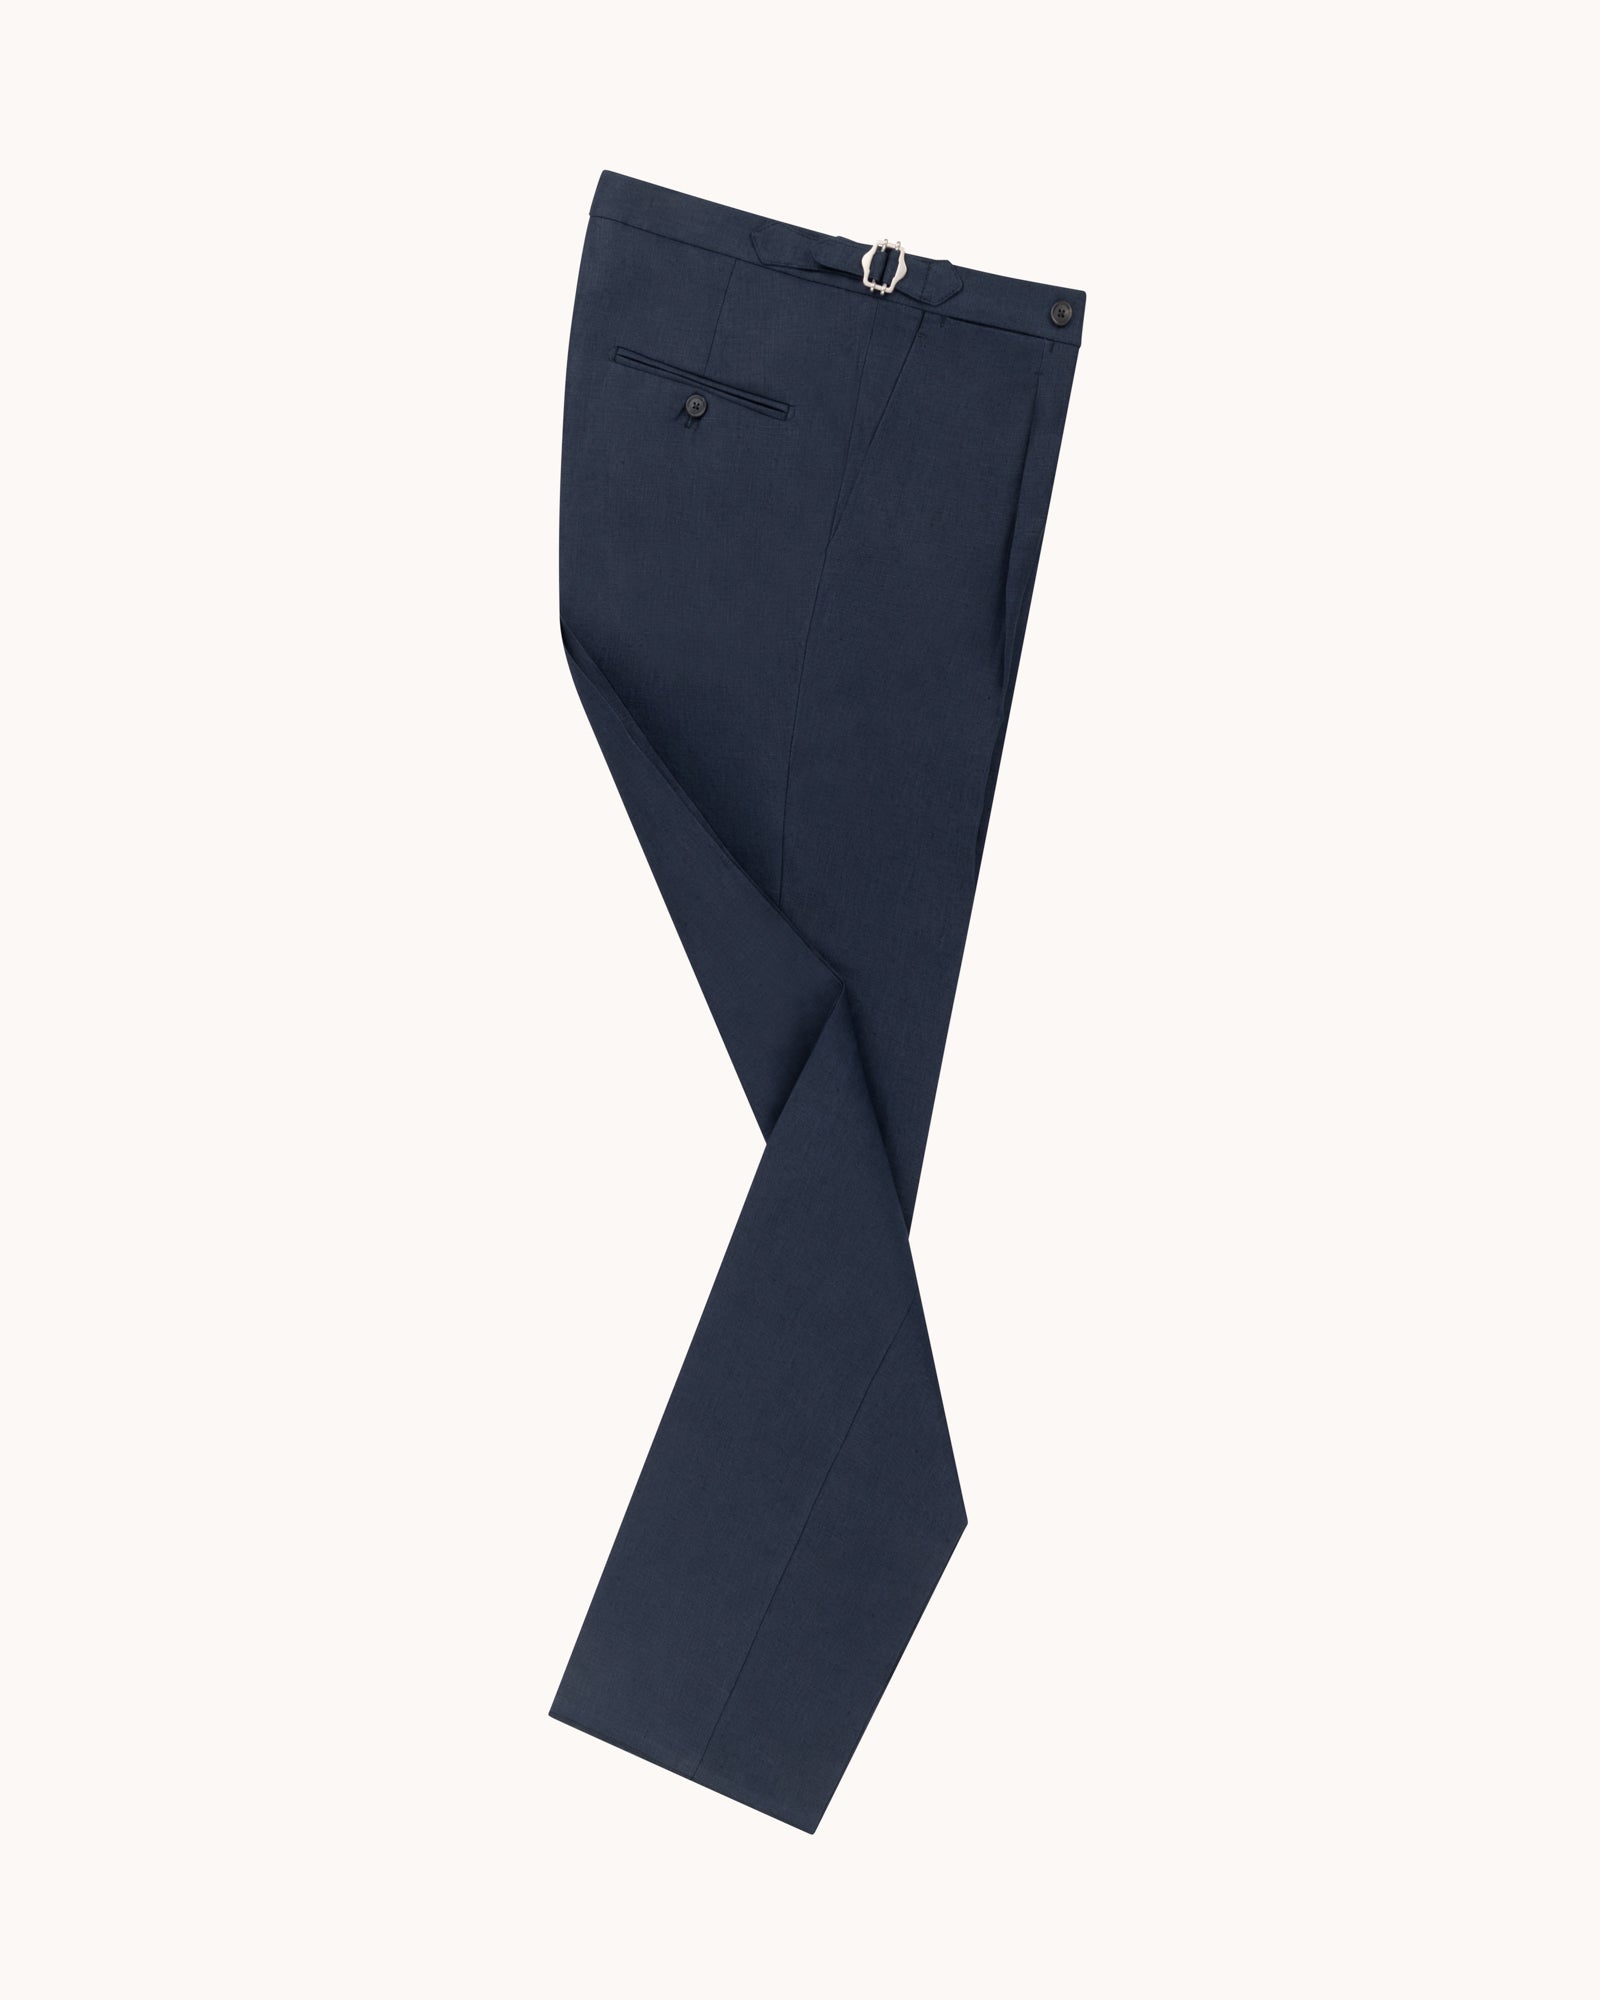 Hart Schaffner Marx Tailored Regular Chicago Fit Single-Pleat Dress Pants |  CoolSprings Galleria